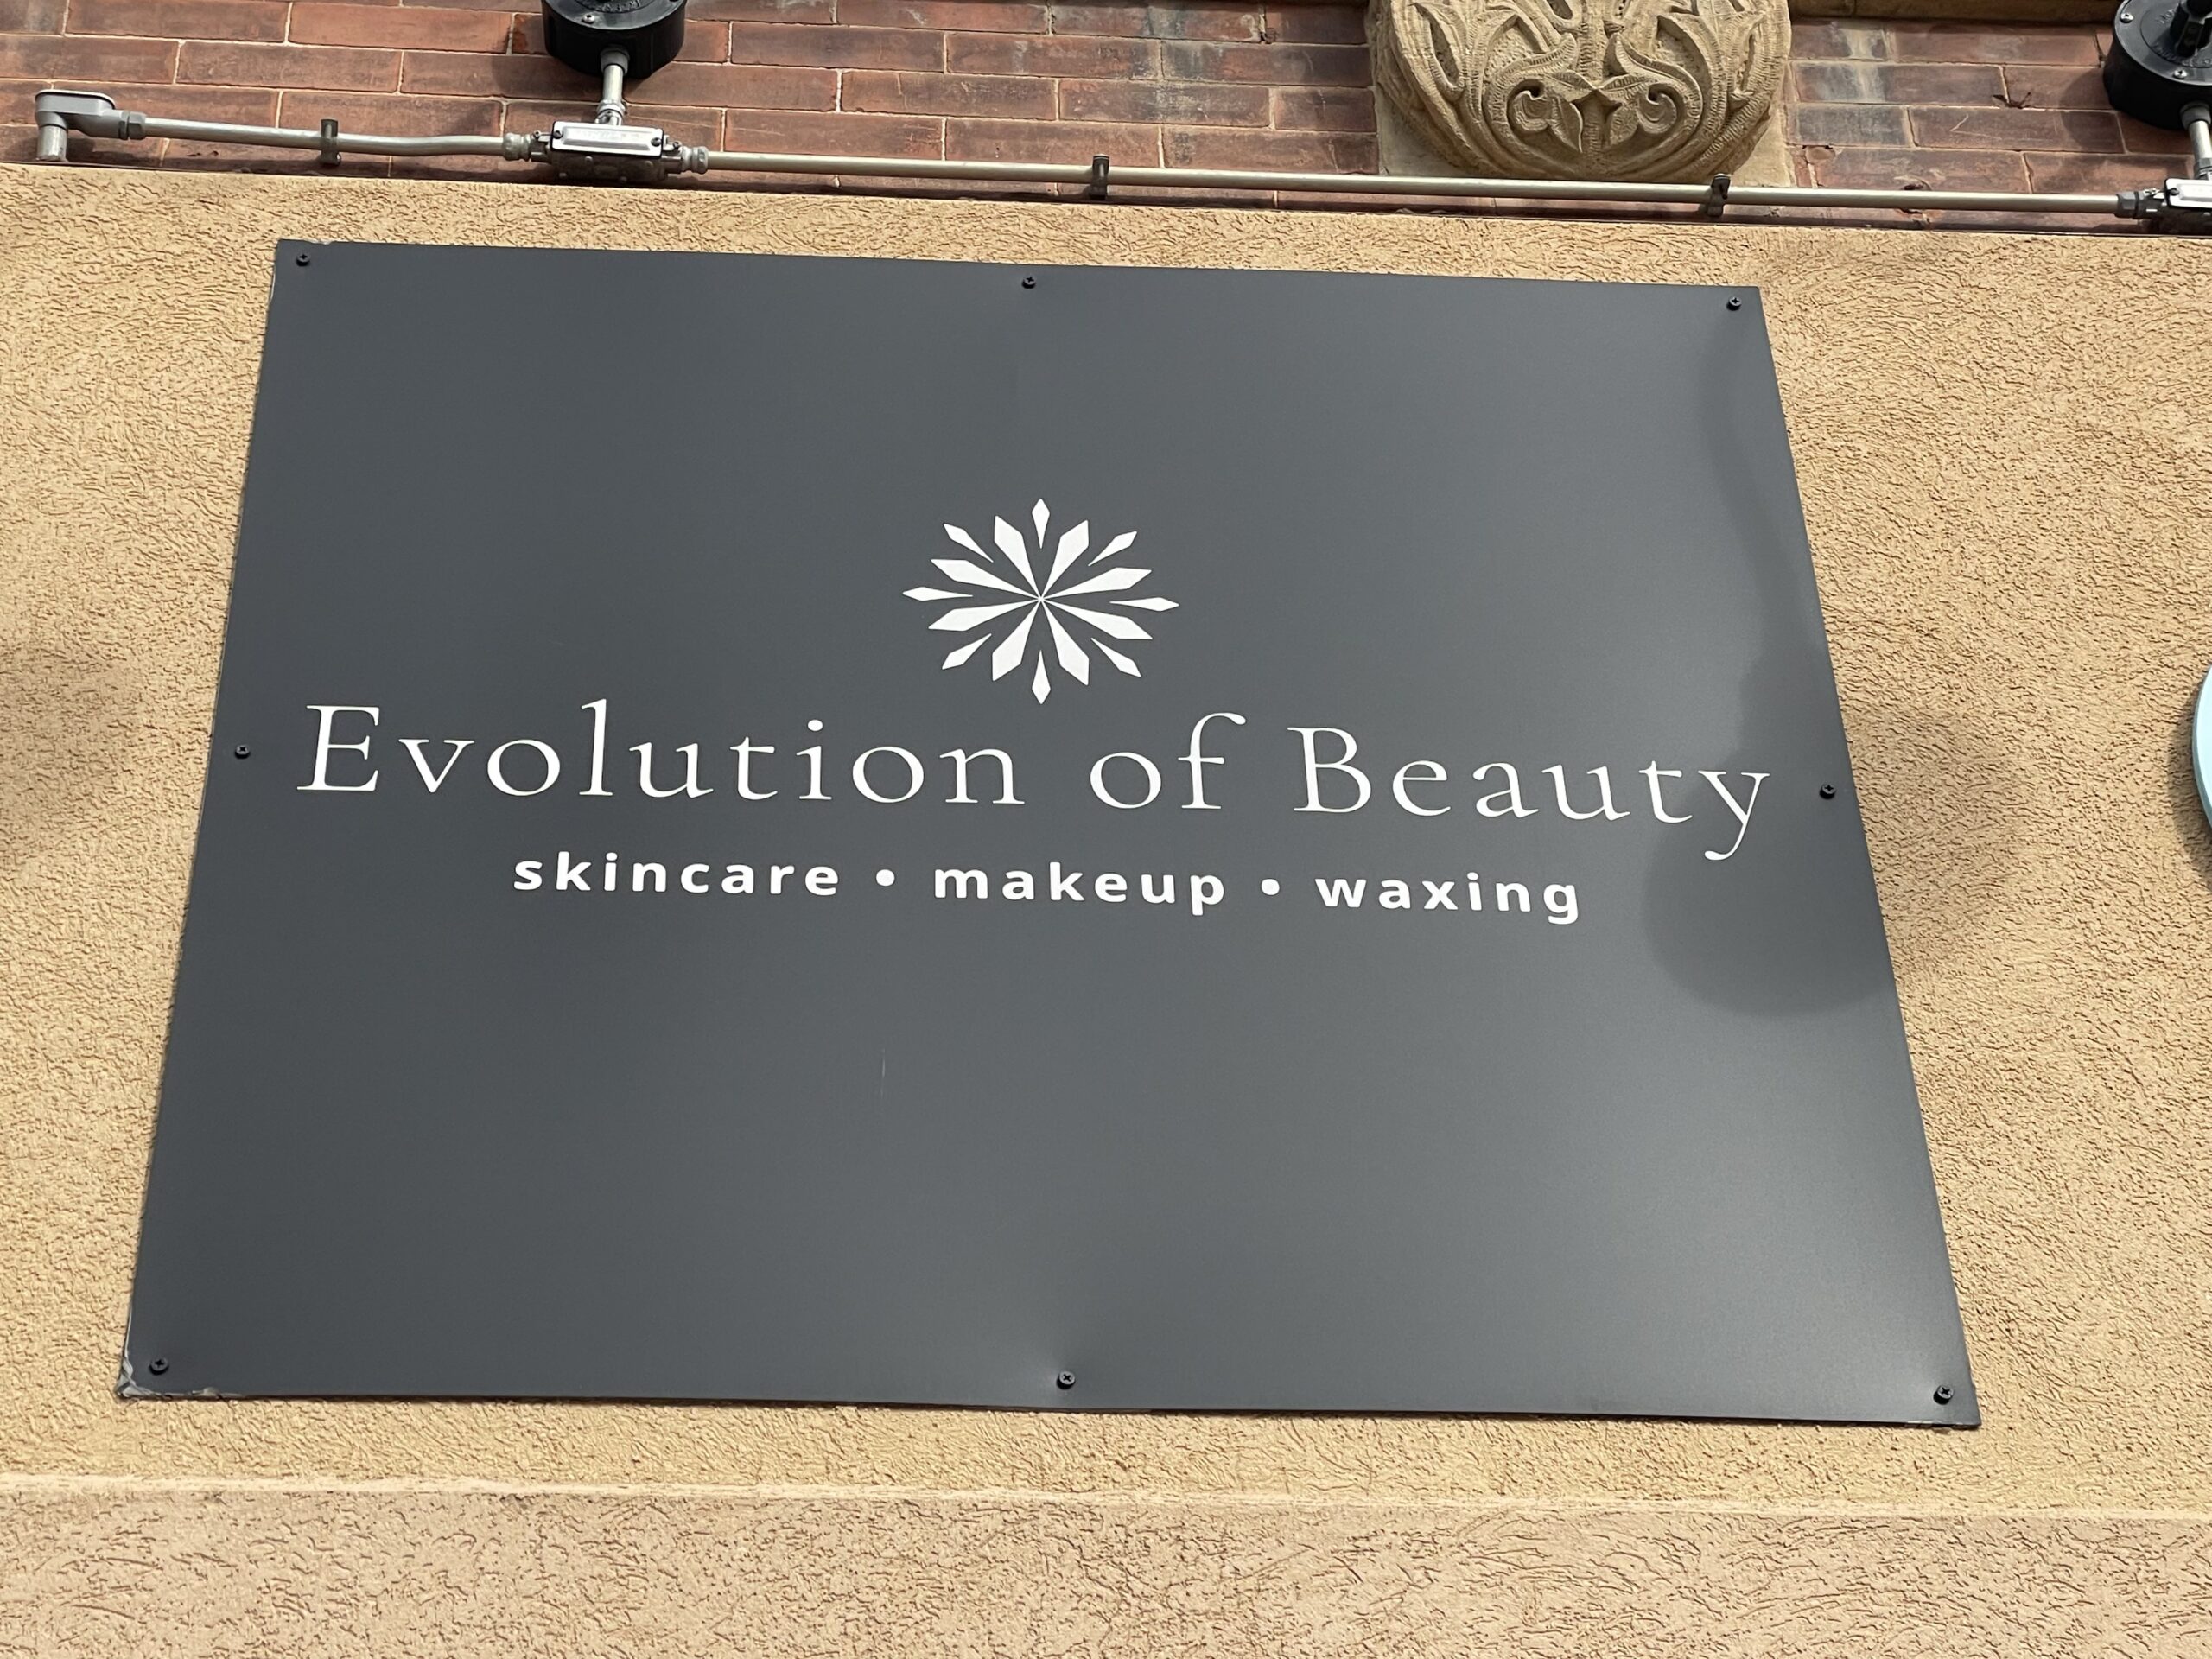 Outside of Evolution of Beauty